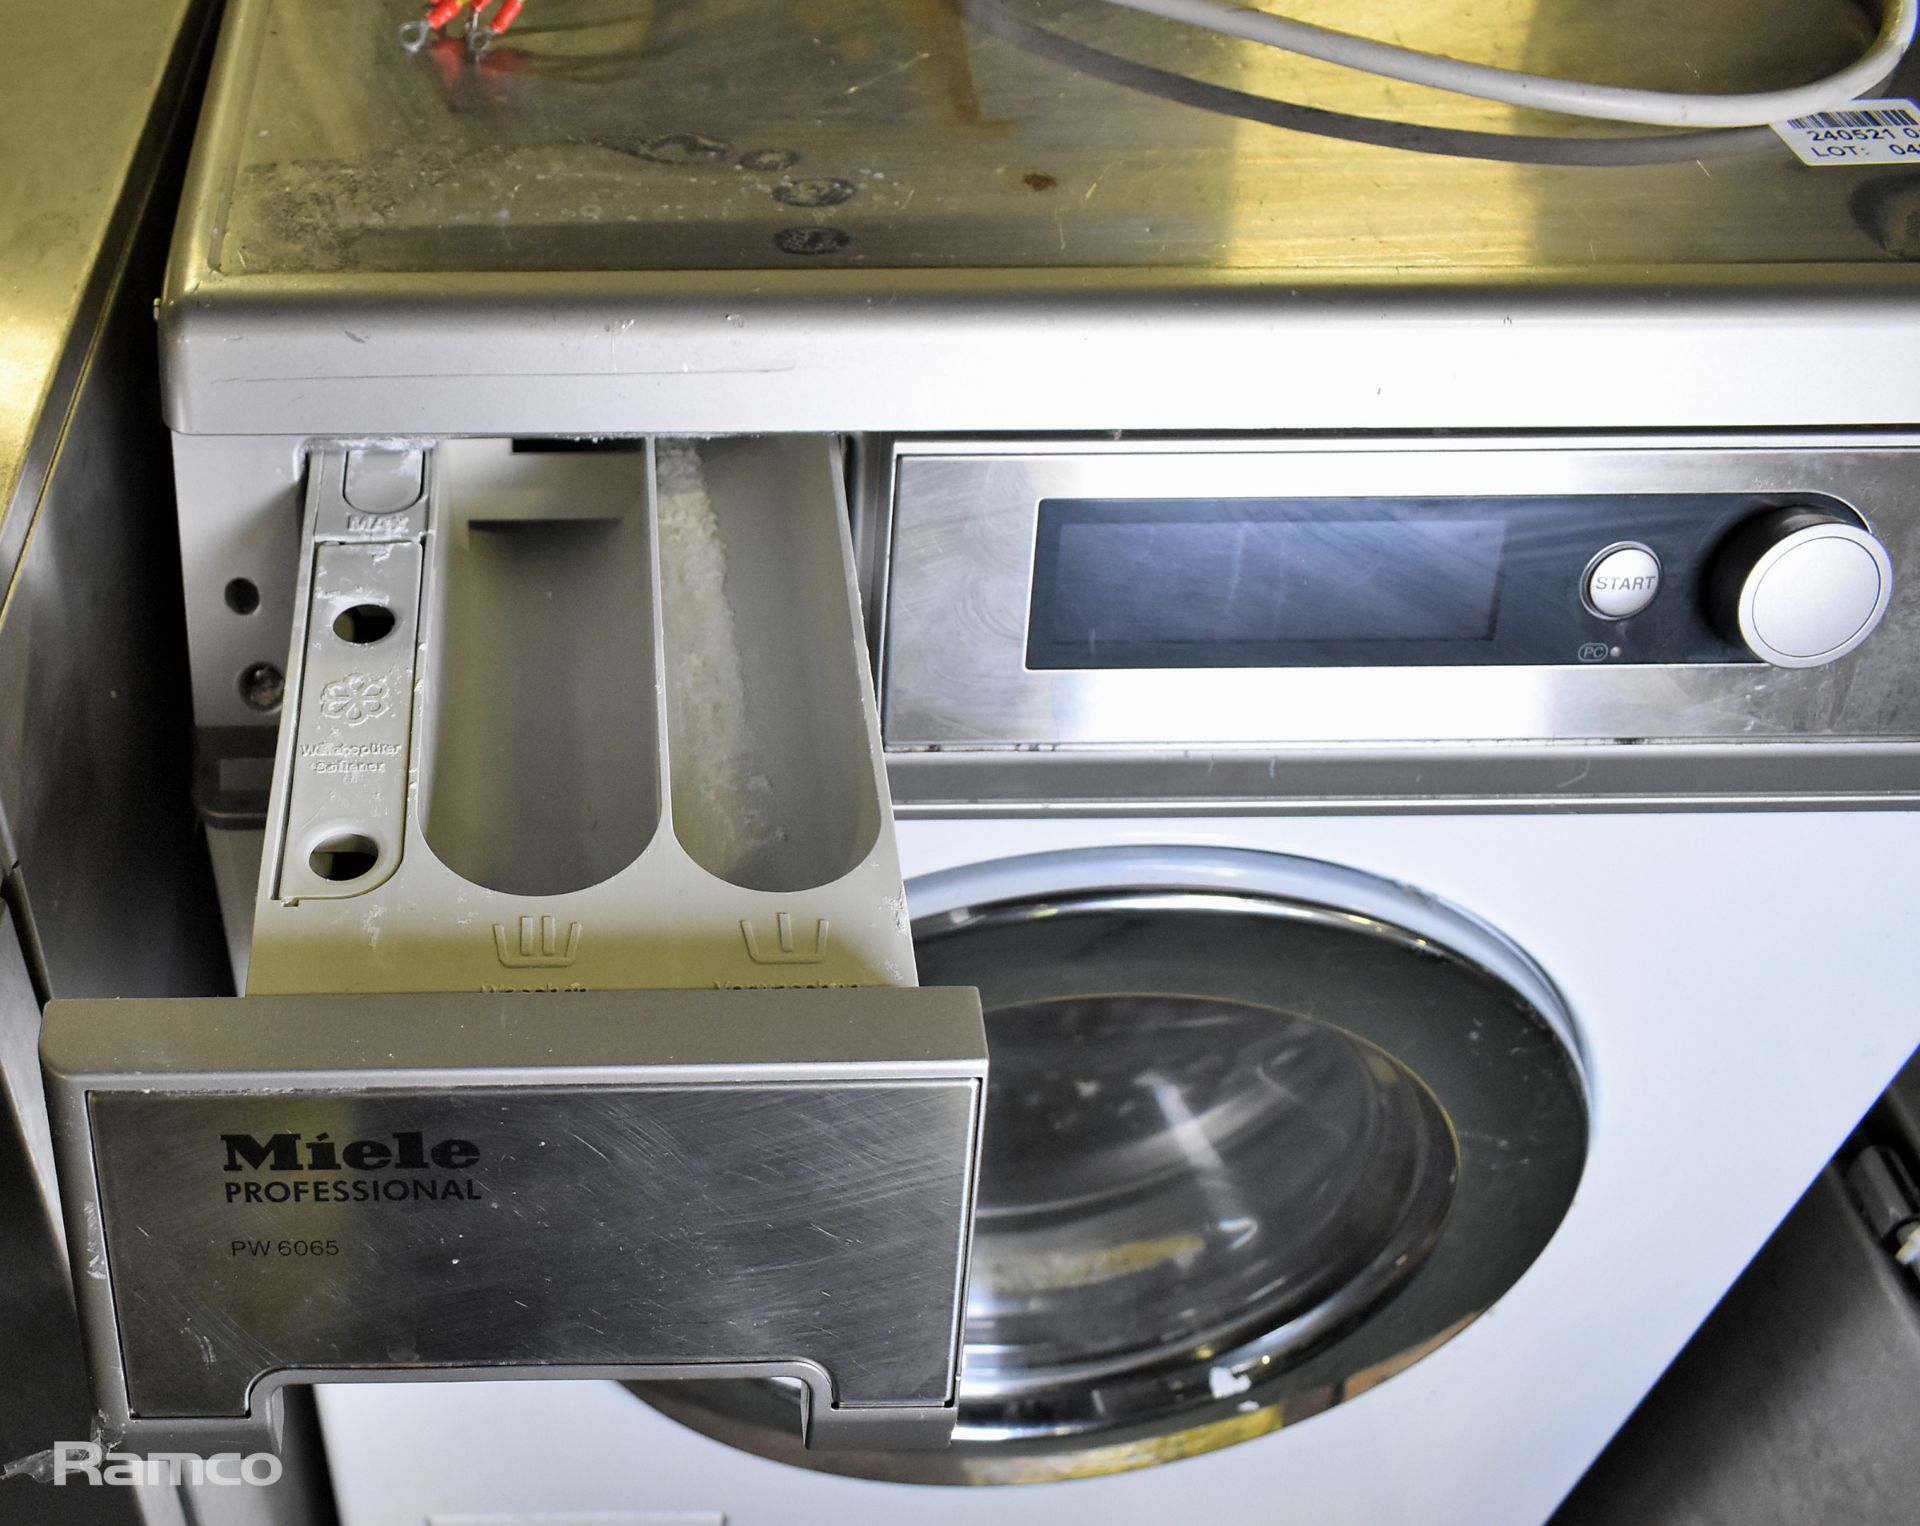 Miele Professional PW 6065 washing machine - 6.5kg capacity - W 595 x D 725 x H 850mm - Image 3 of 4